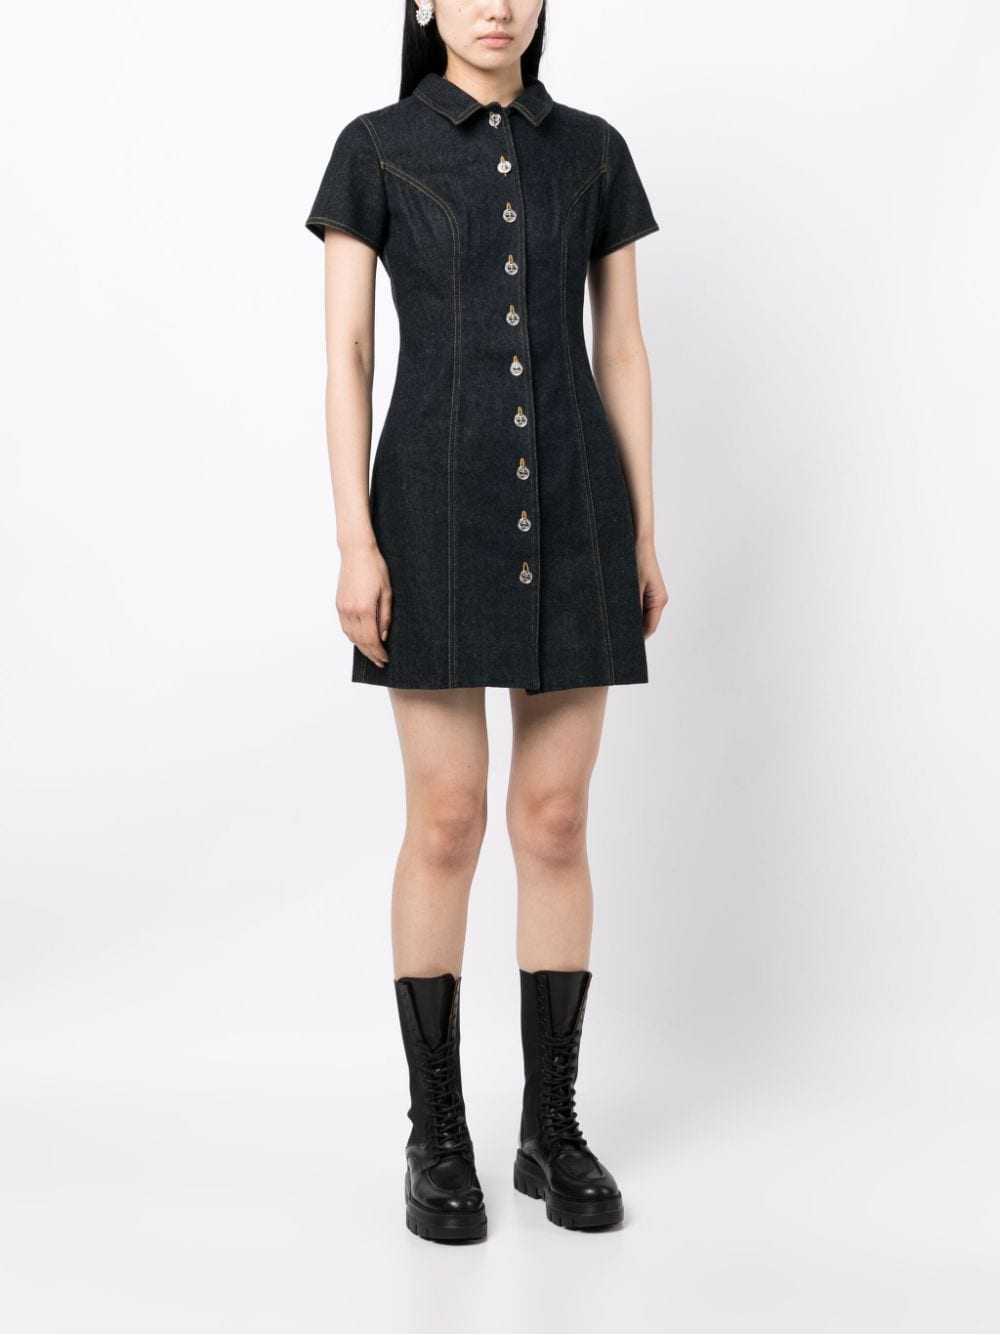 $1945 NEW Chanel Black Knit Mini Dress WOOL Short Pink CC Logo Pocket 34 